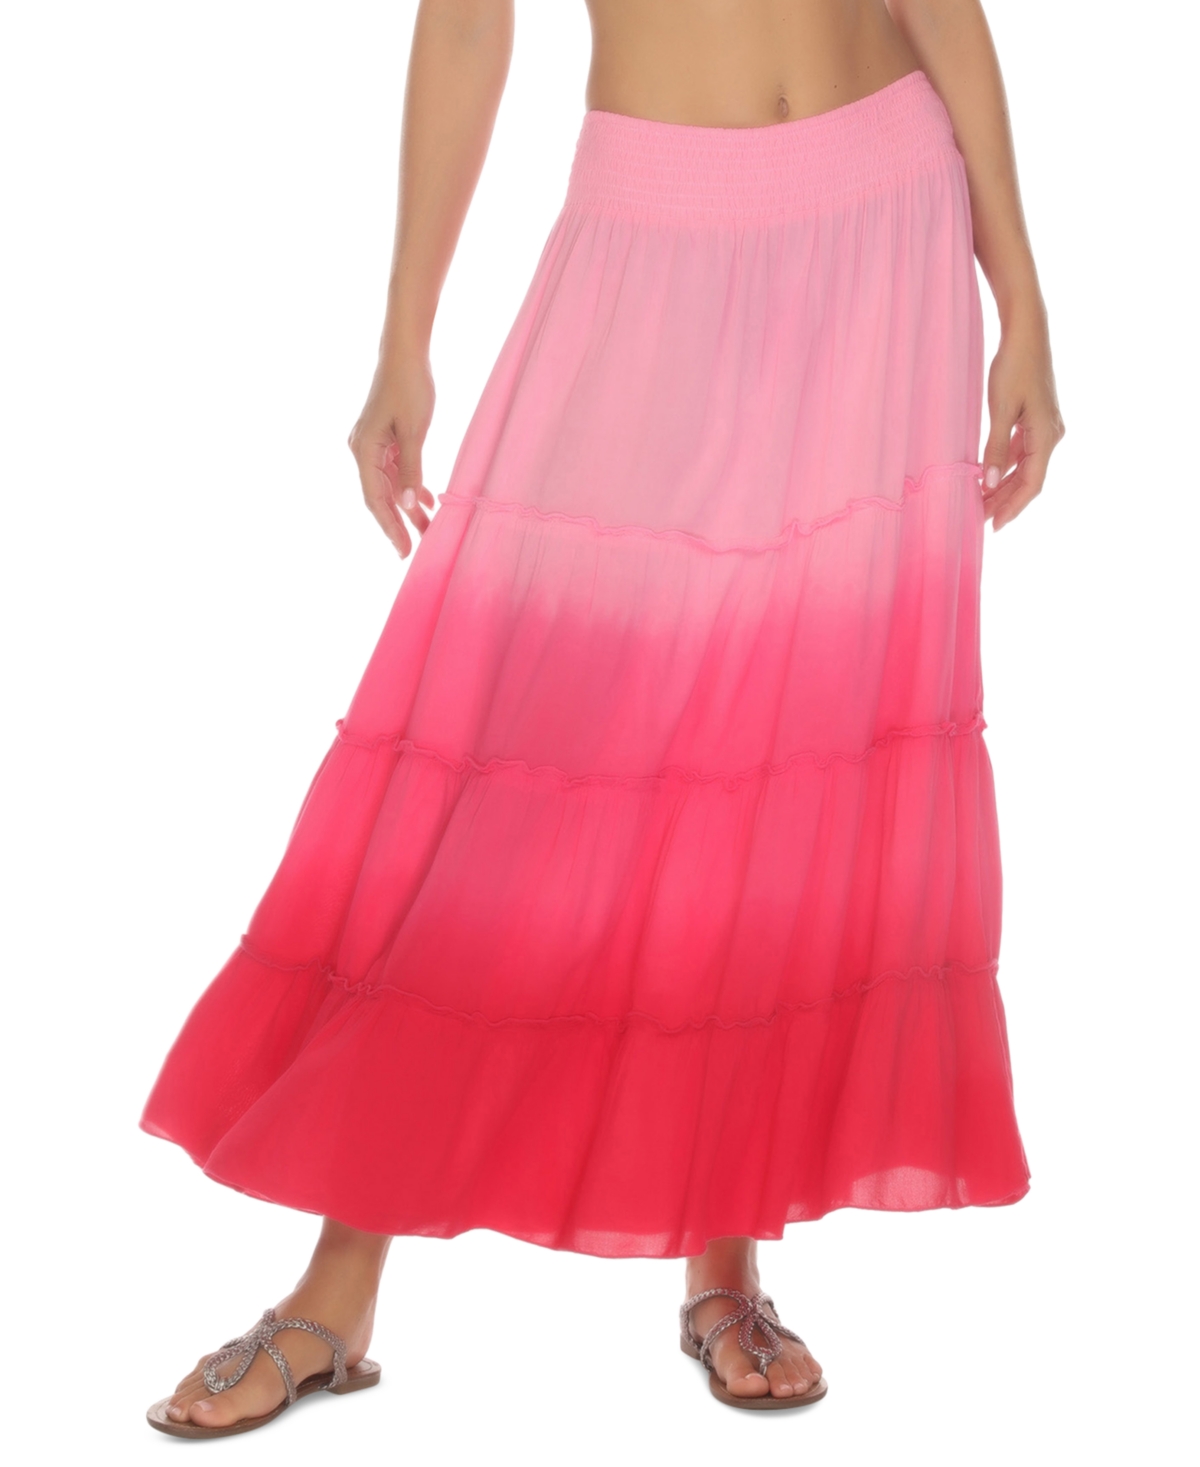 Women's Smocked-Waist Ombre Skirt Cover-Up - Raspberry Ombre